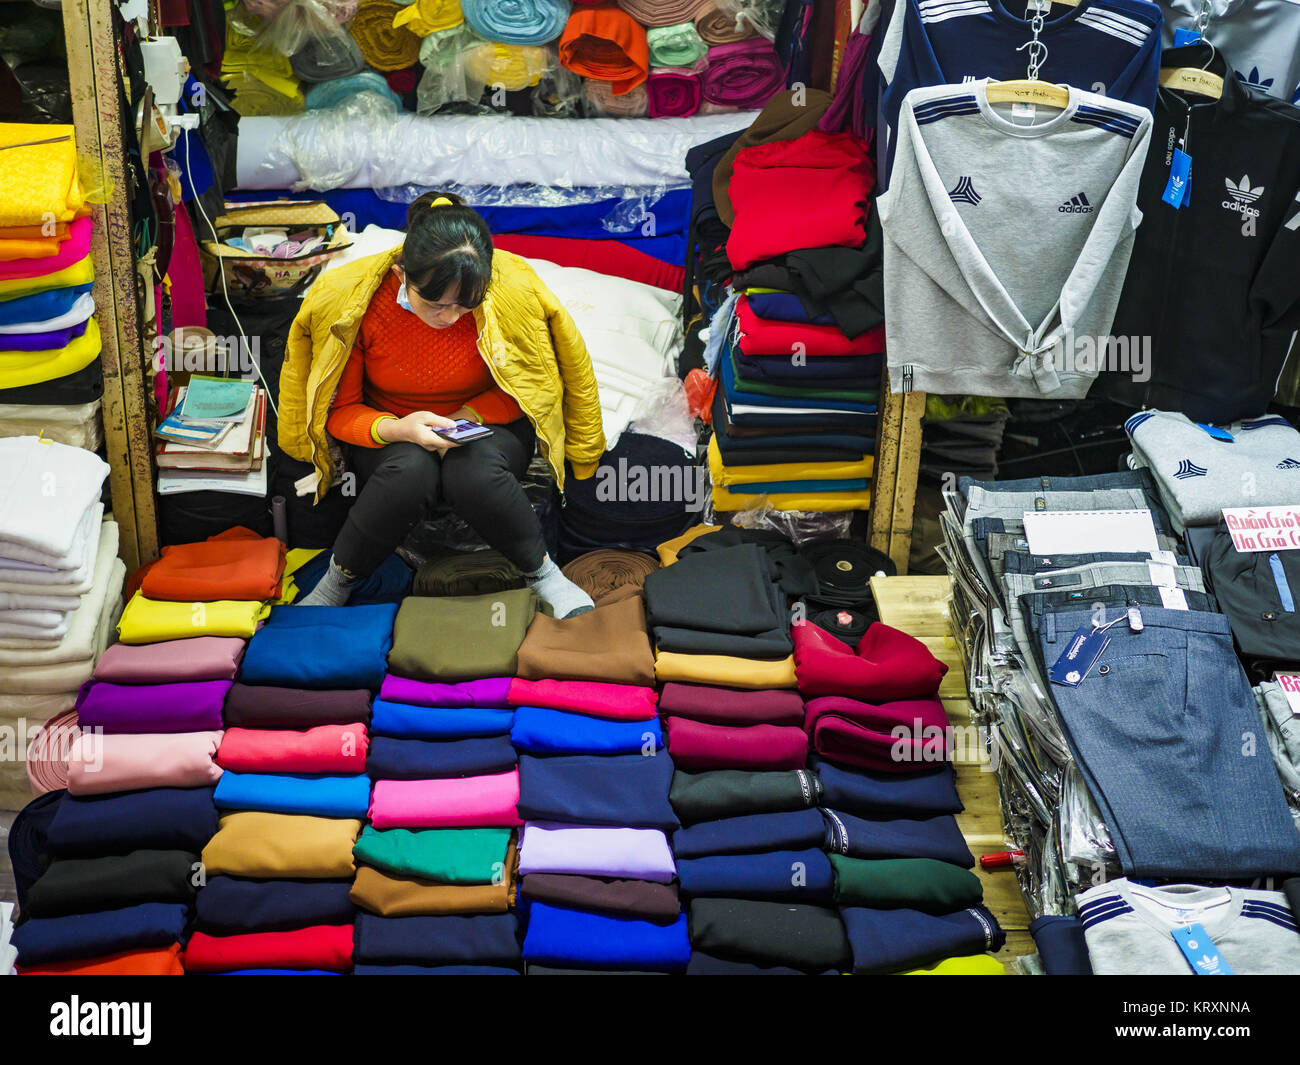 12 Best Wholesale Fabric and Cloth Markets in Mumbai | Shopkhoj